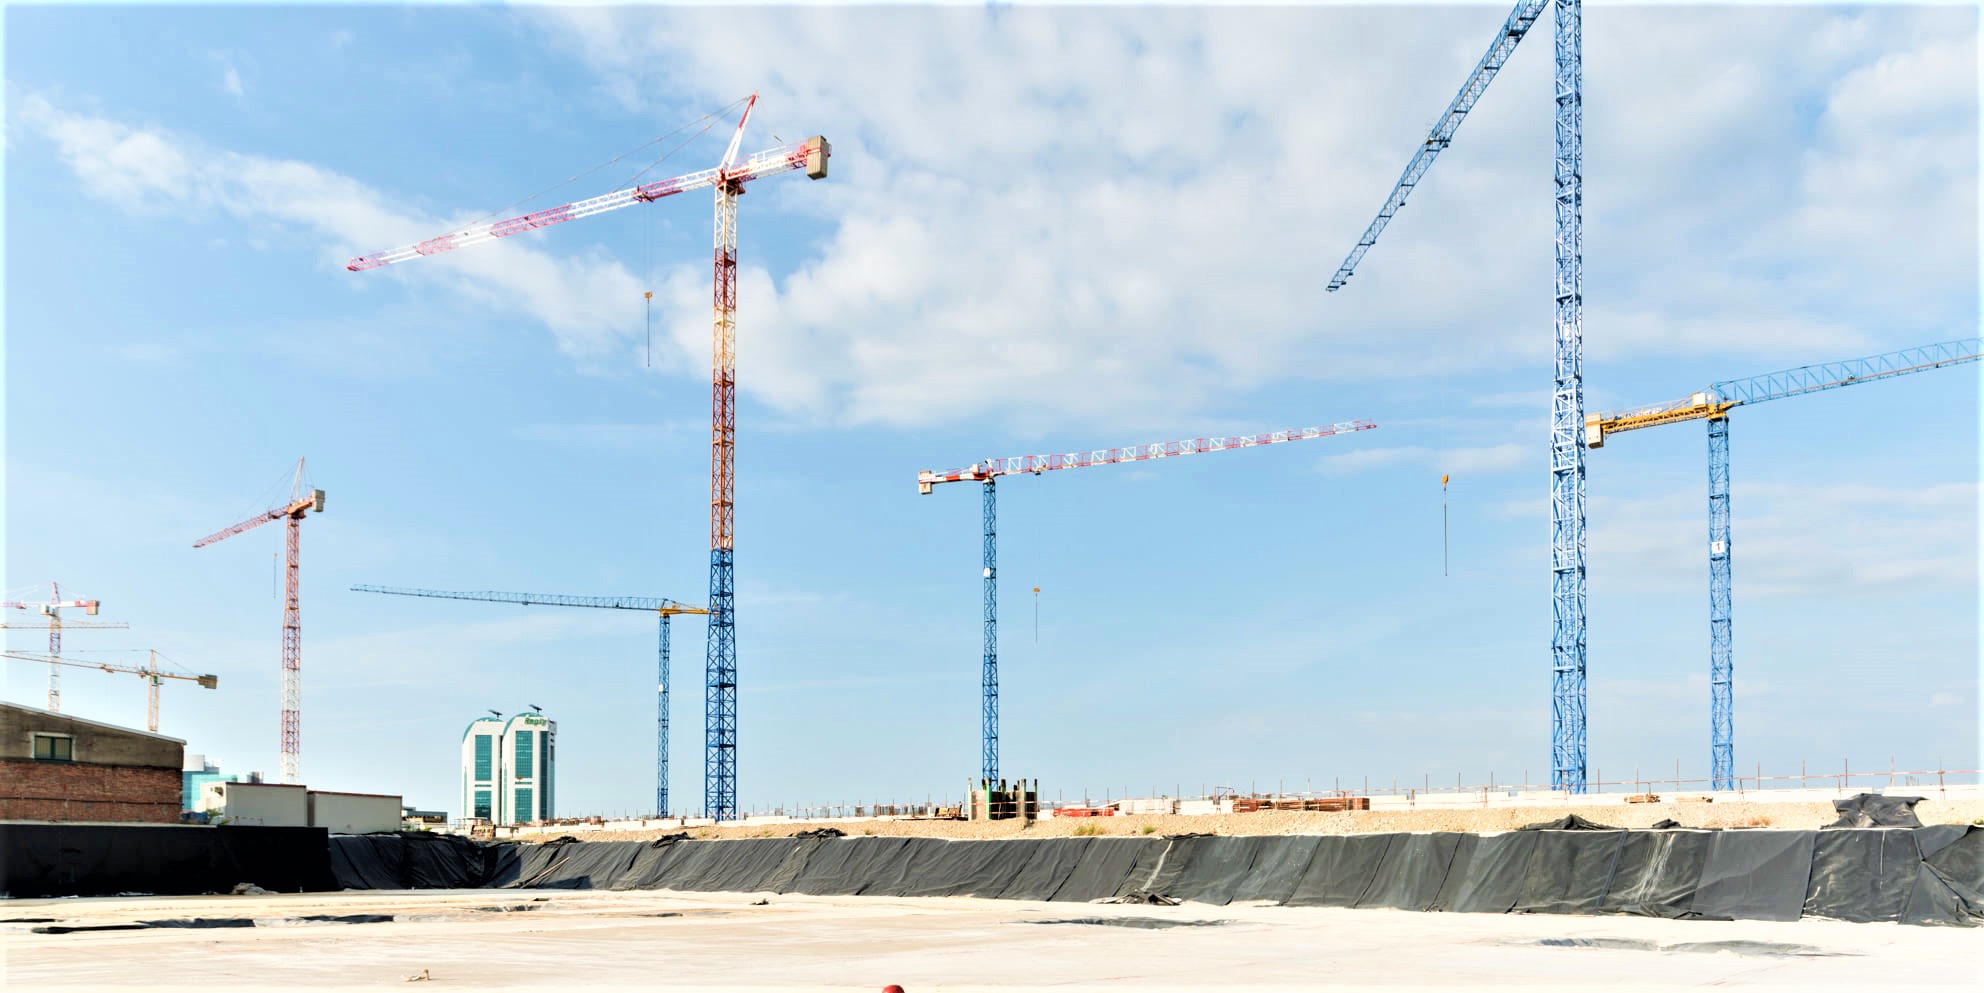 Assistedile to erect a total of nine Raimondi cranes on premier Milan jobsite